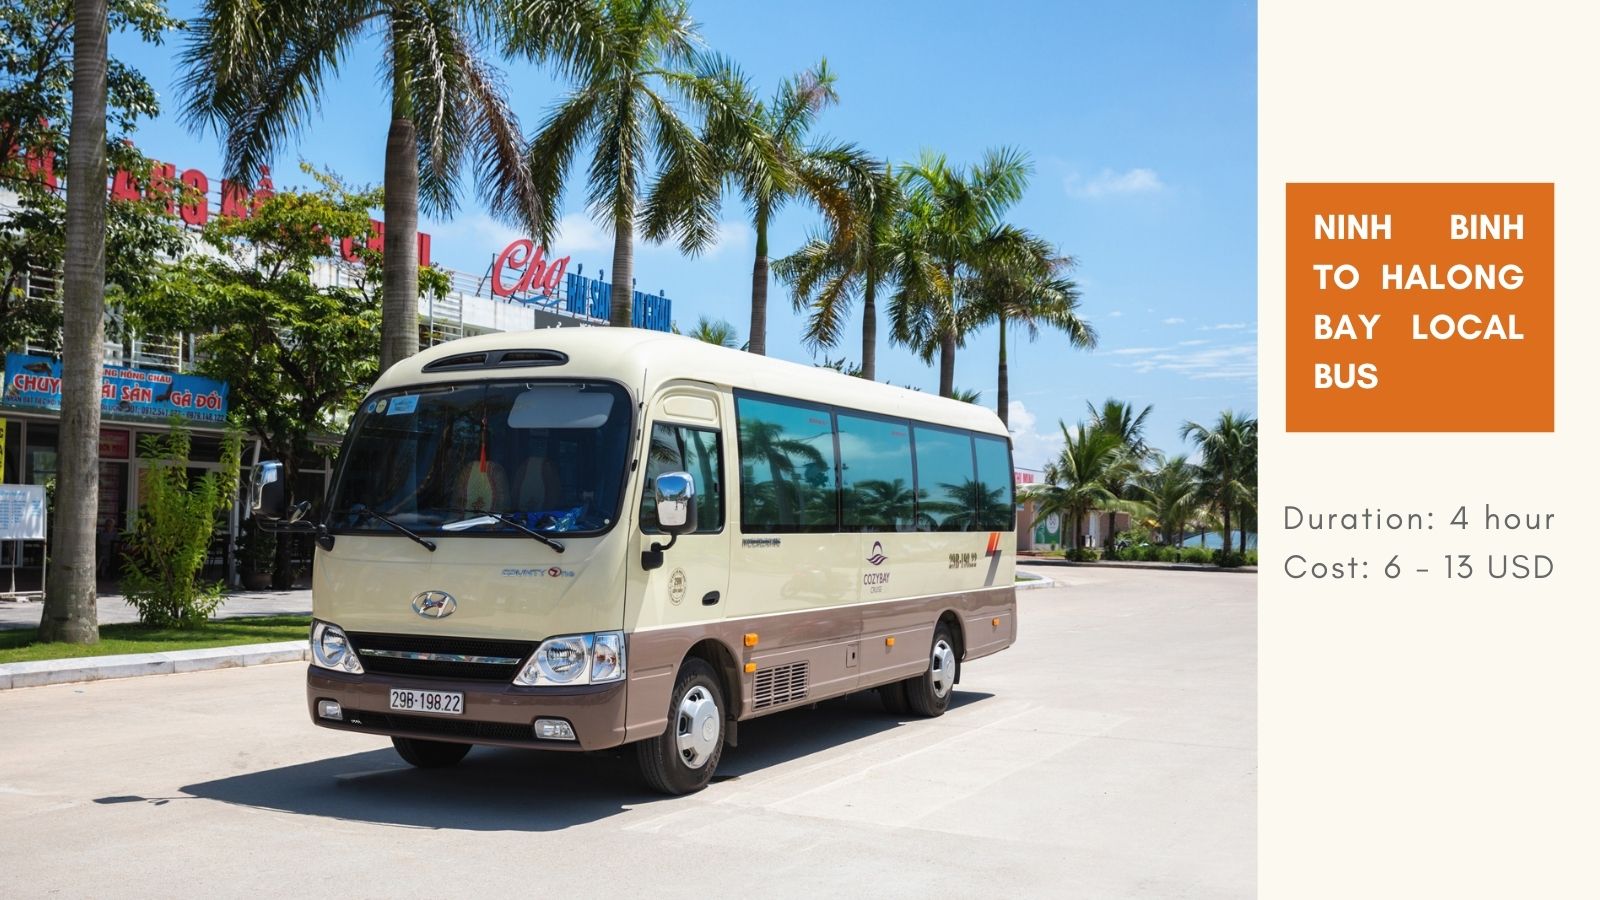 Ninh Binh to Halong Bay local bus